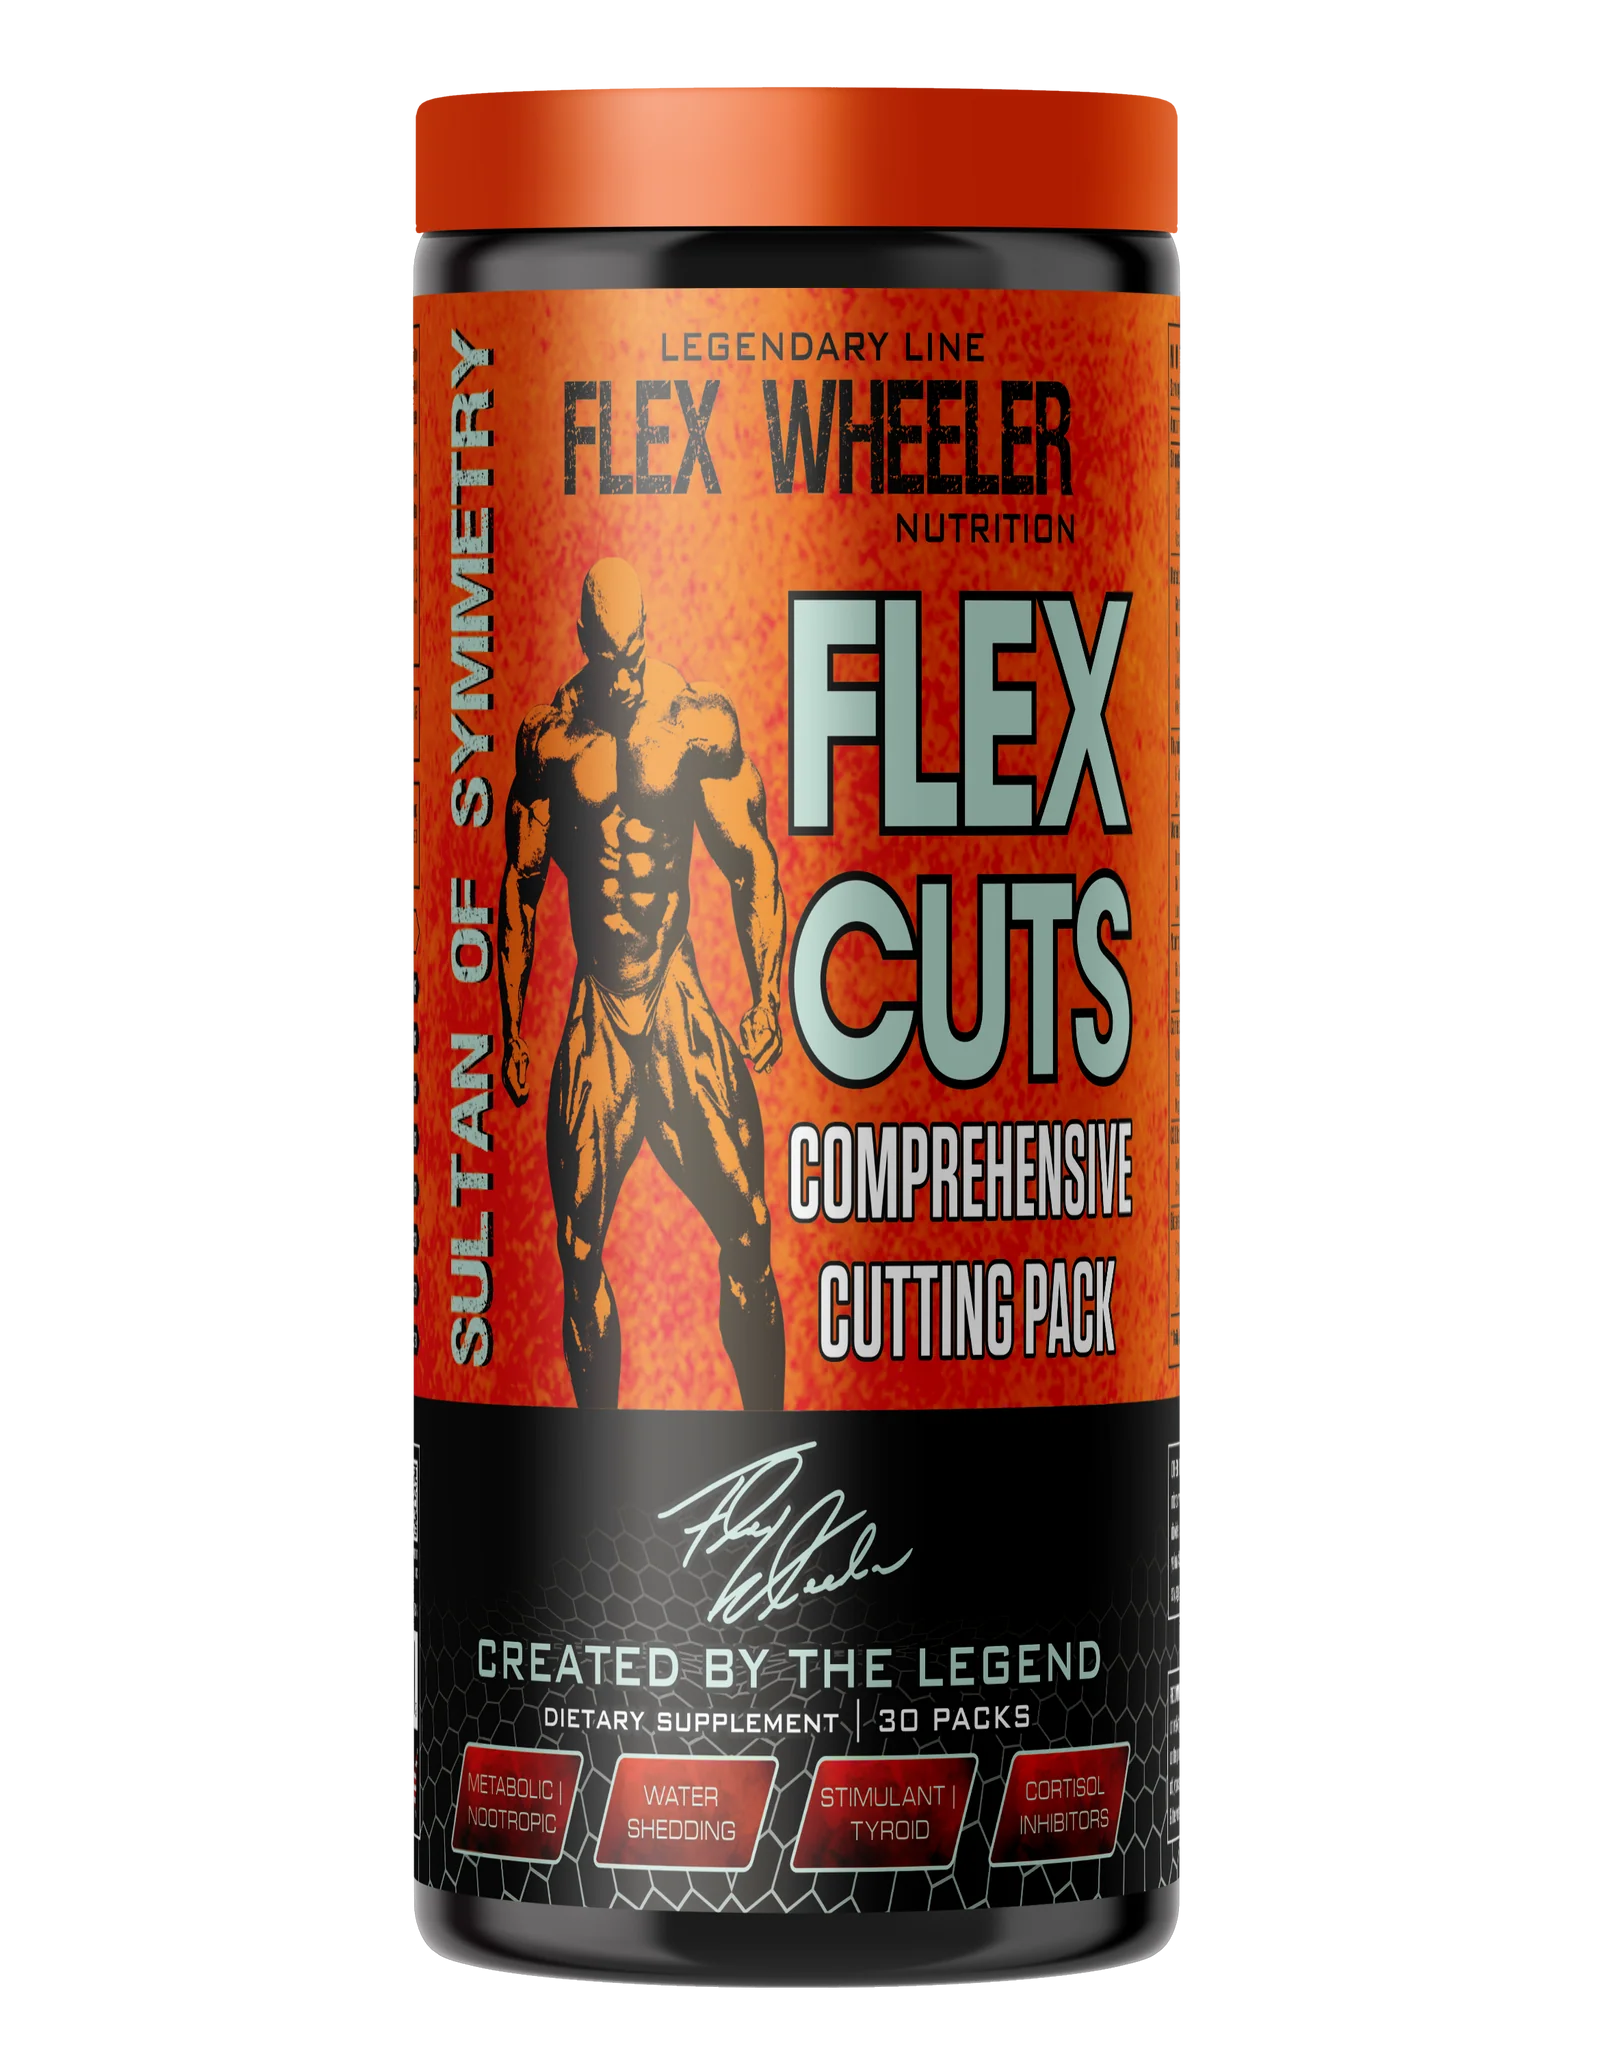 Flex Wheeler Legendary Flex Cuts Comprehensive Cutting -30  Pack